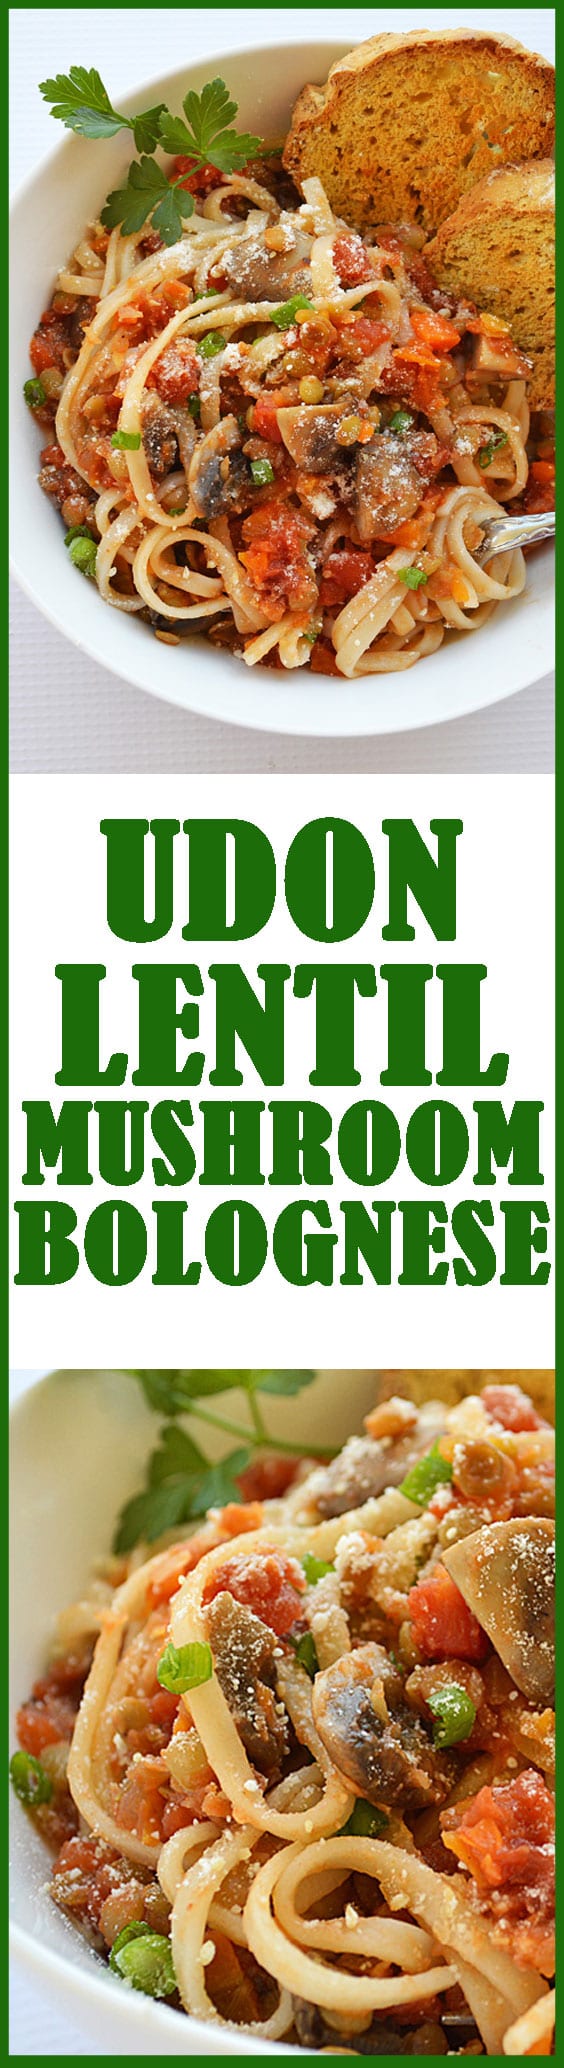 UDON LENTIL MUSHROOM BOLOGNESE